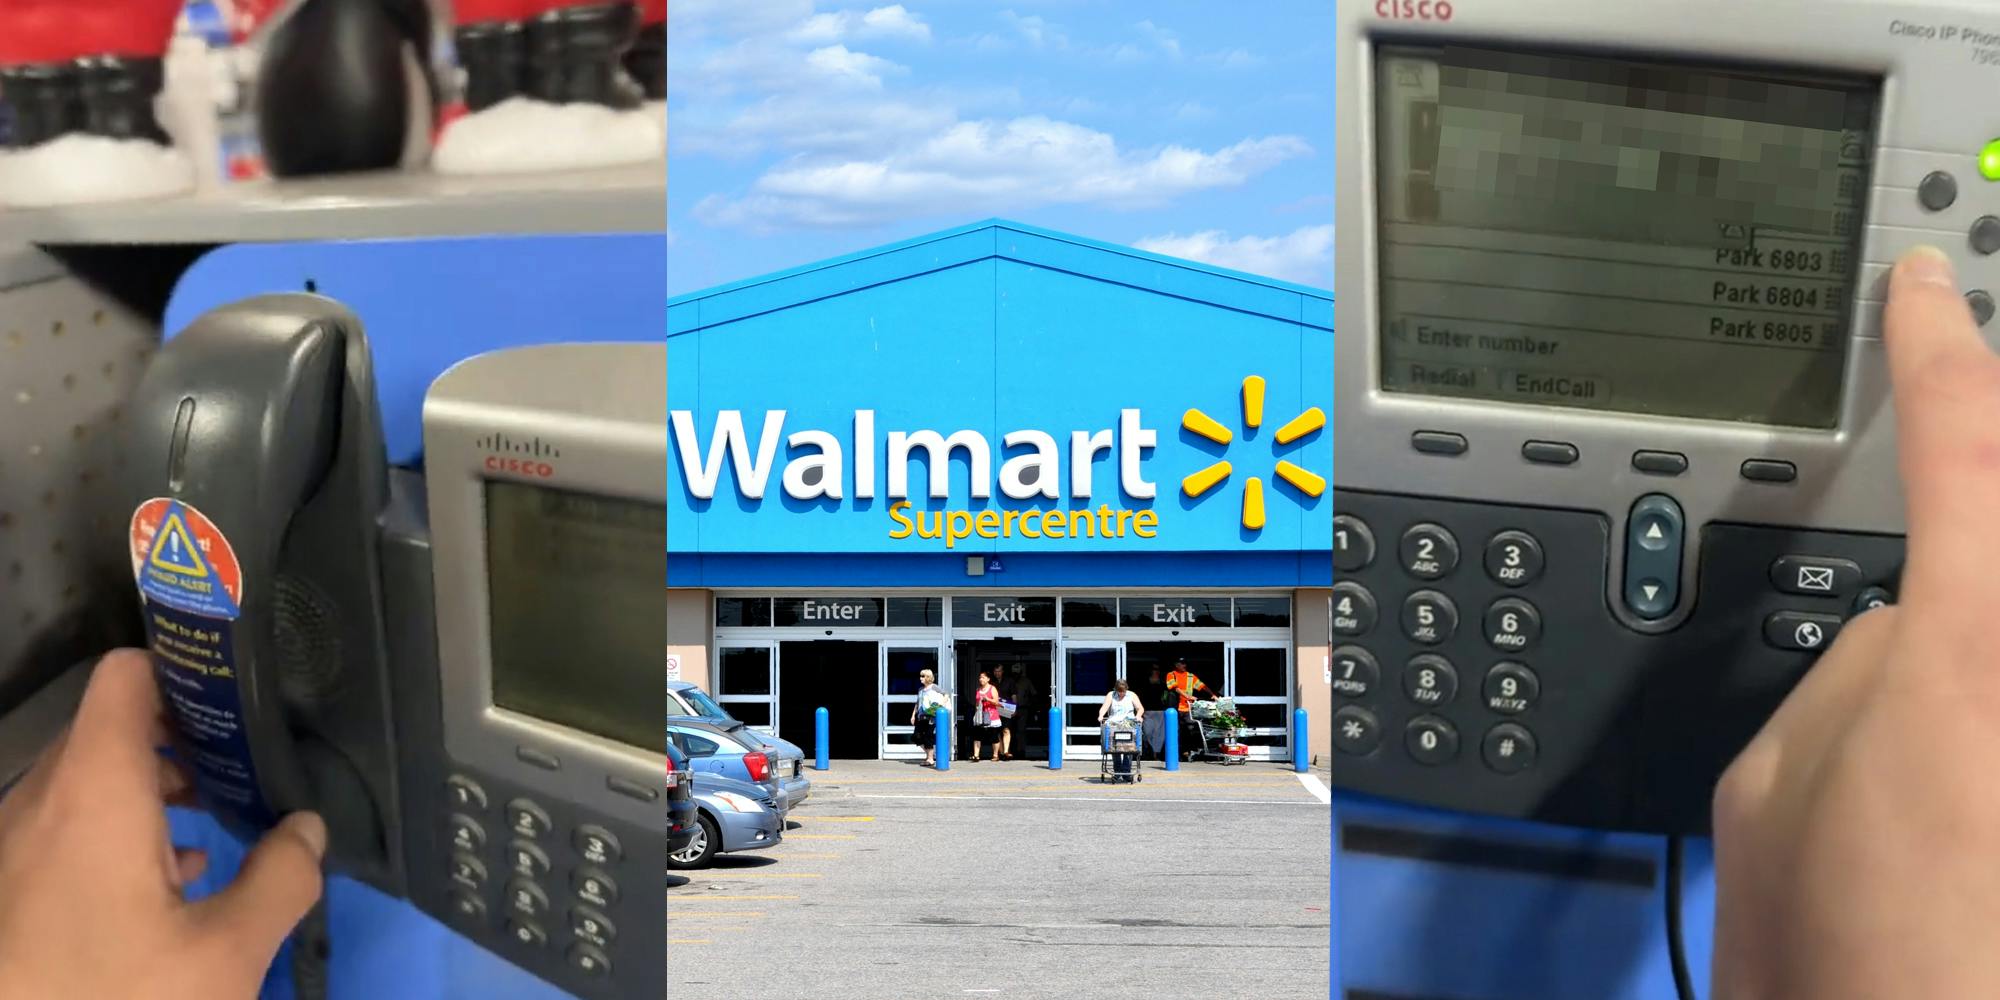 Walmart customer picking up Walmart phone (l) Walmart with sign and parking lot (c) Walmart customer pressing buttons on Walmart phone (r)